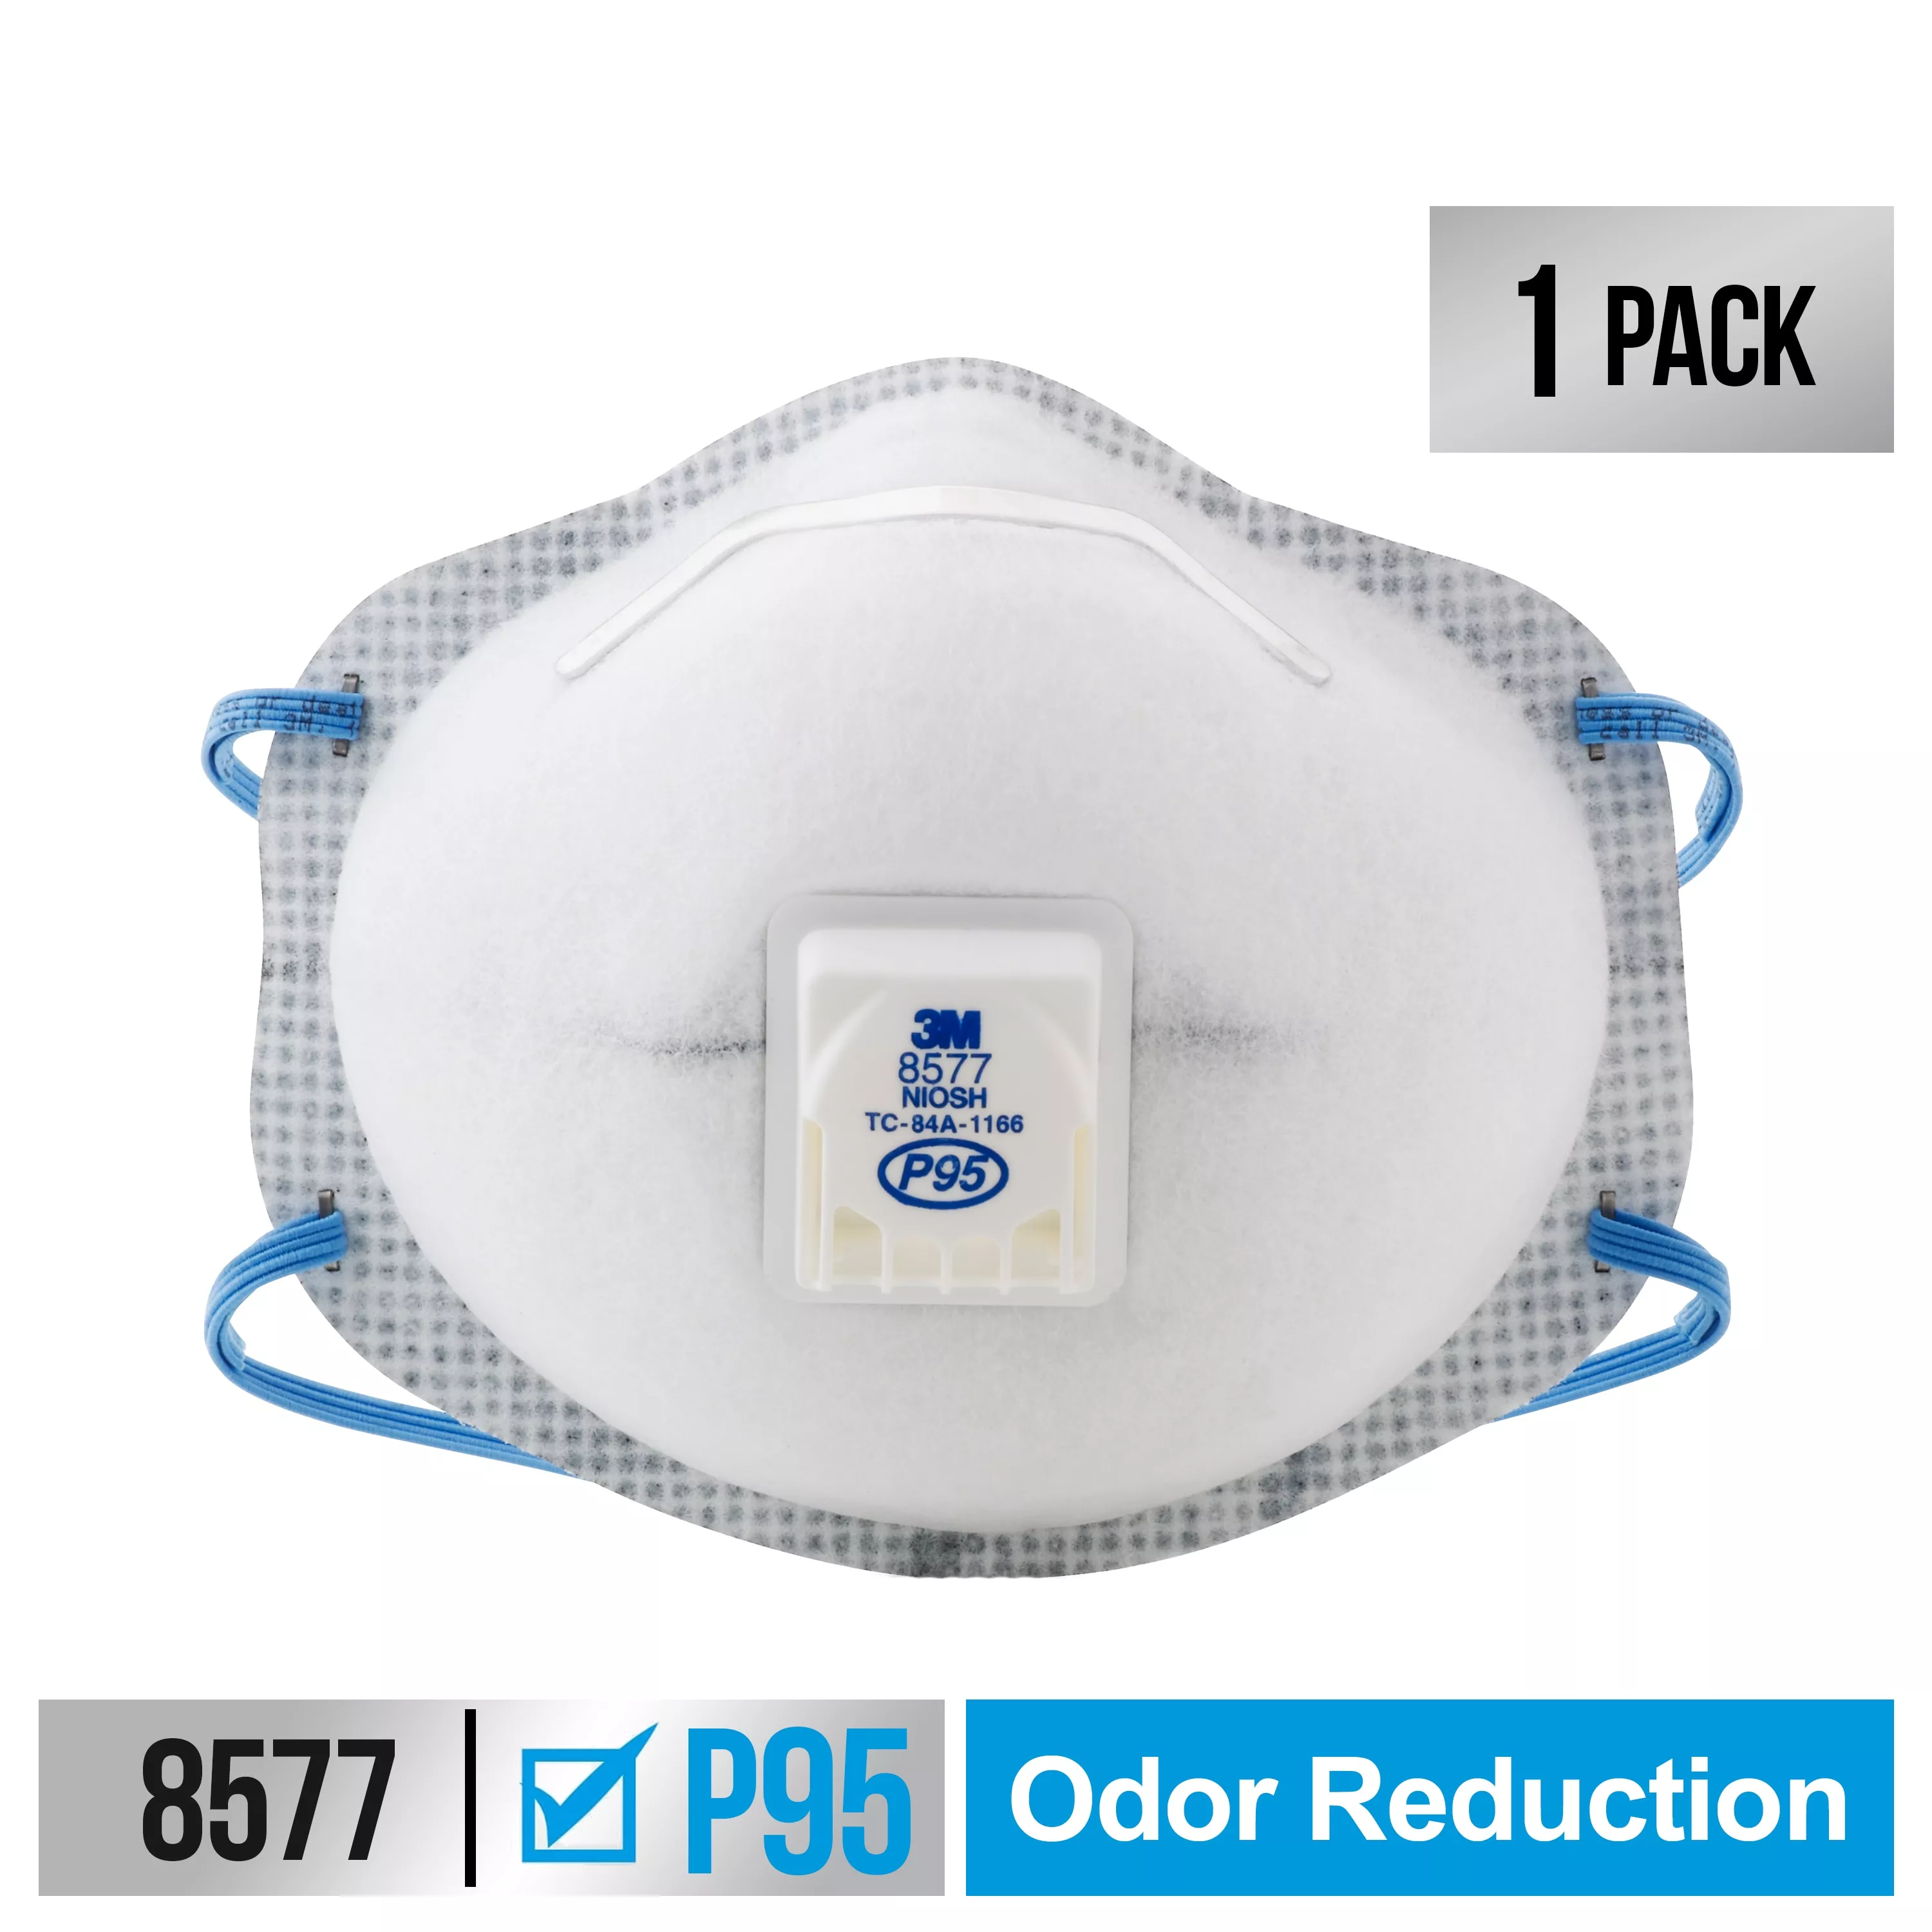 SKU 7100189852 | 3M™ Paint Odor Valved Respirator